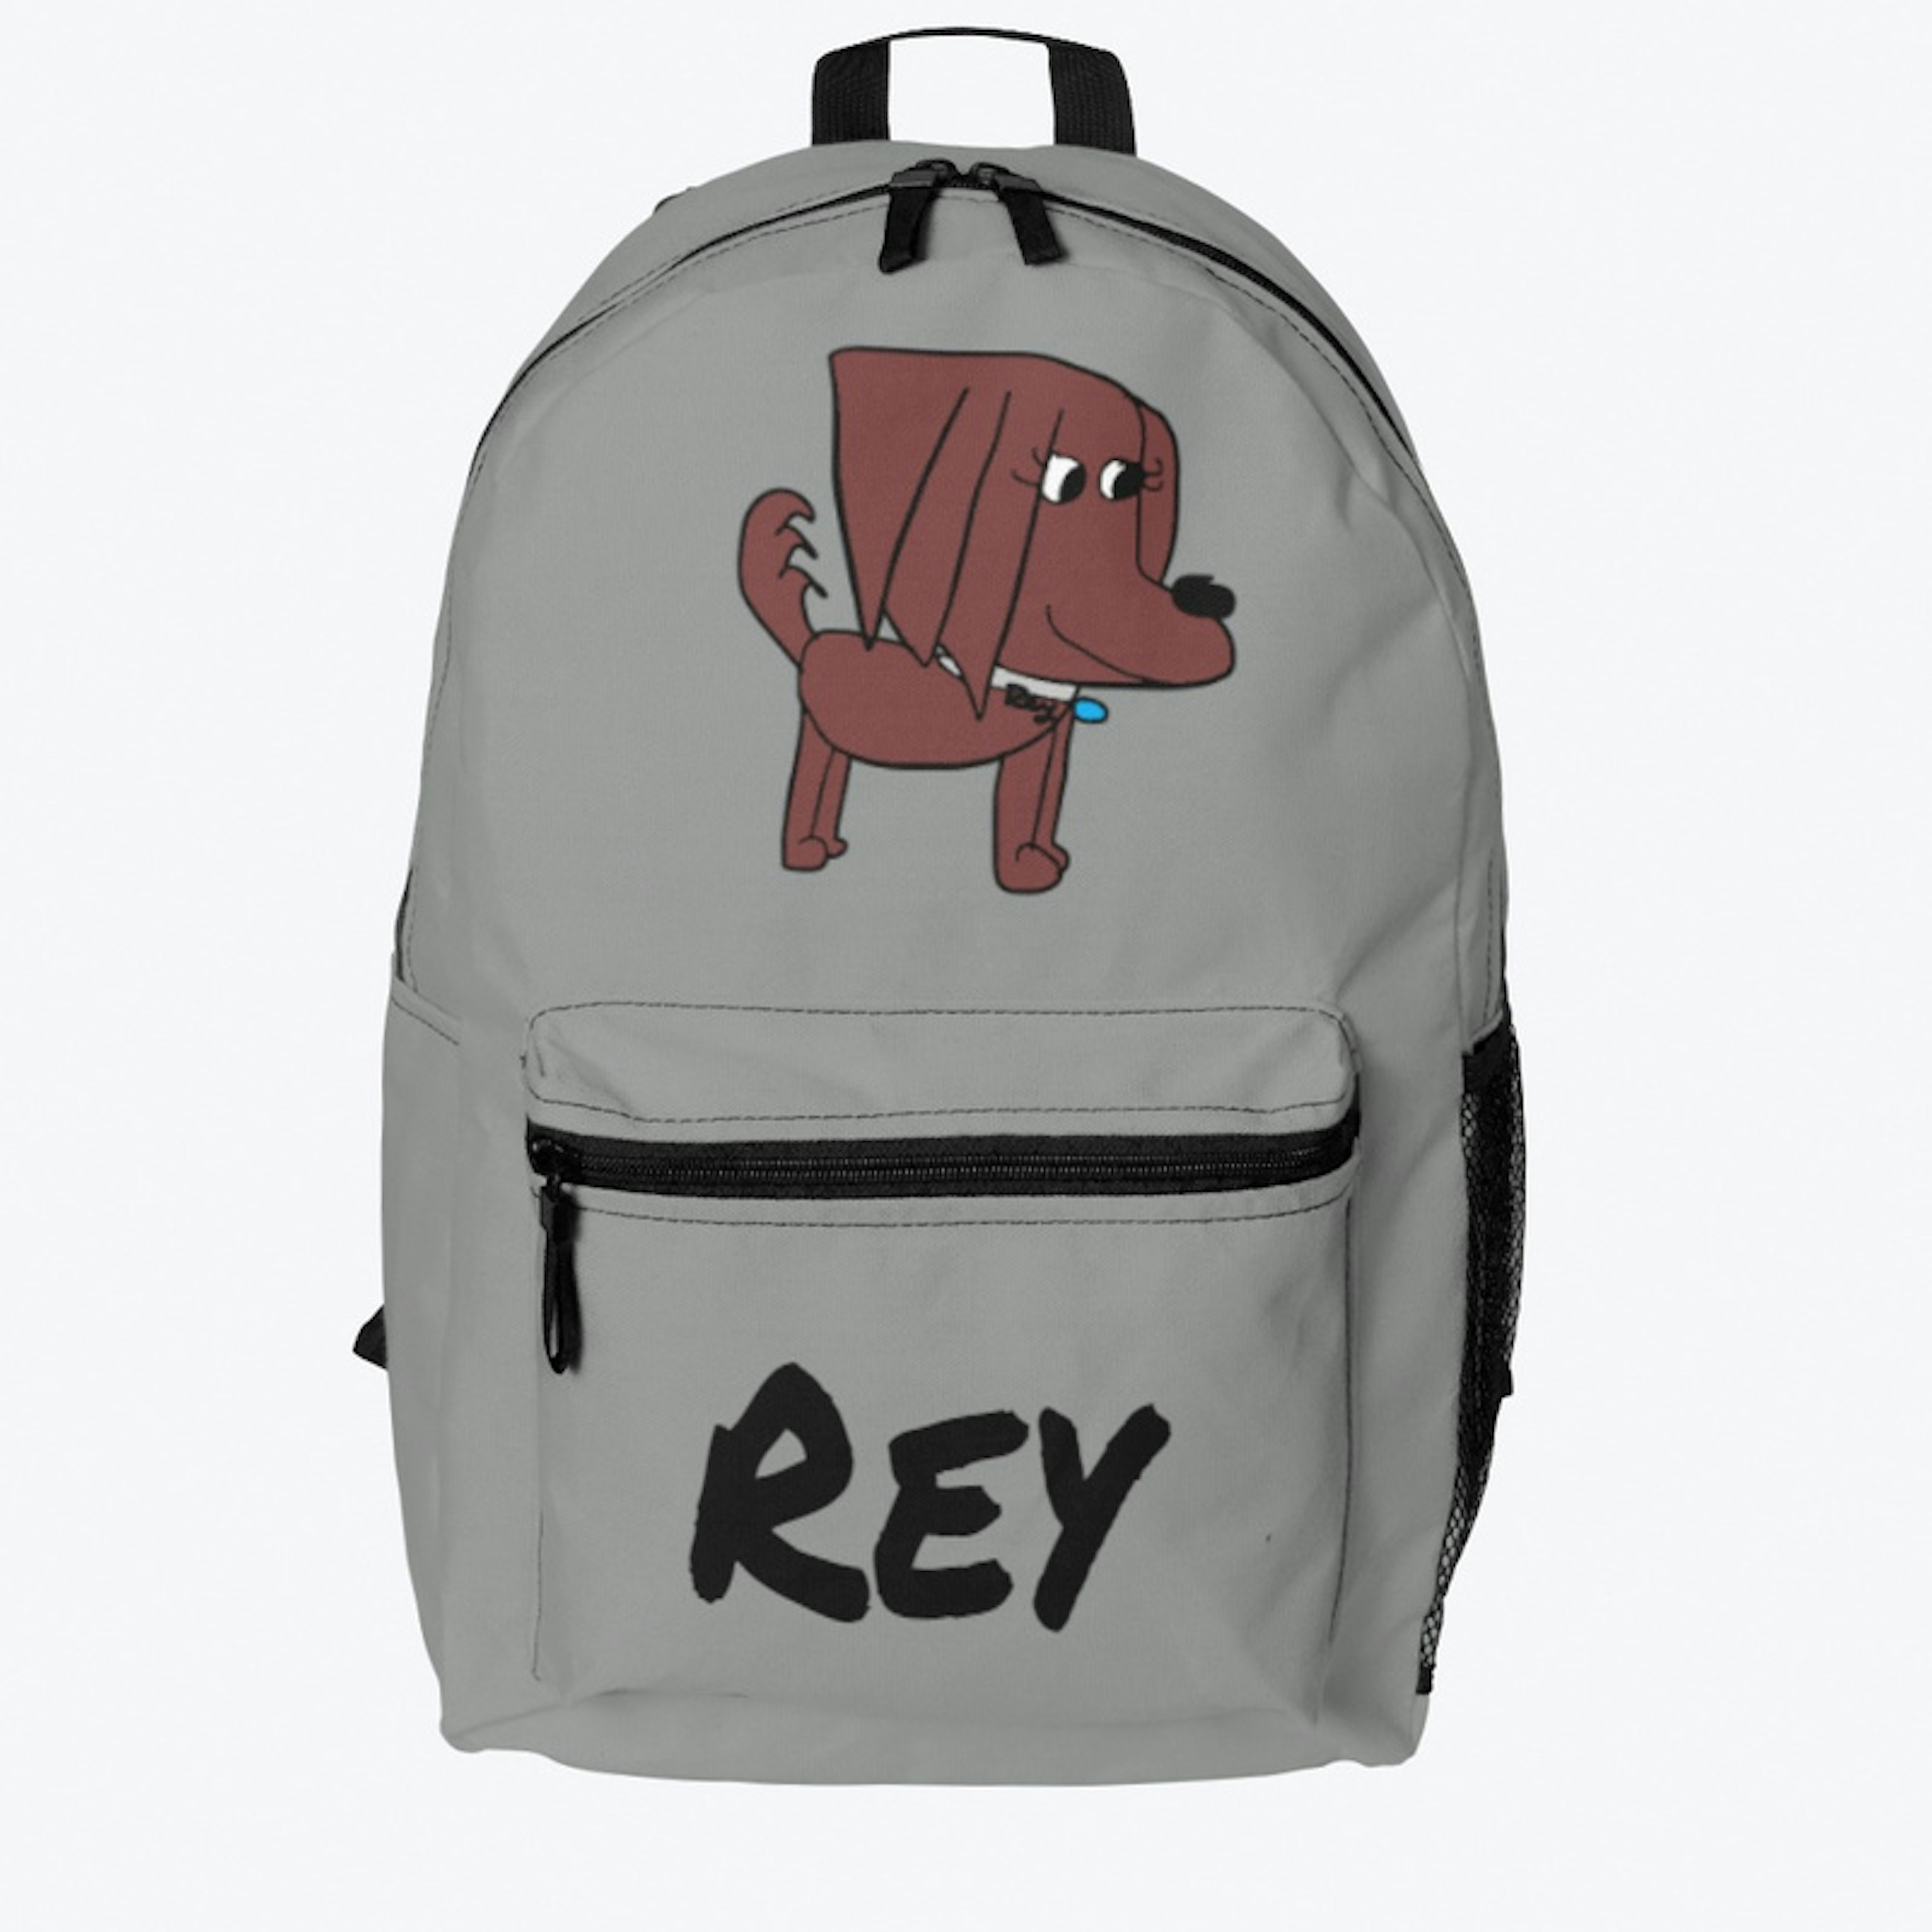 Rey backpack